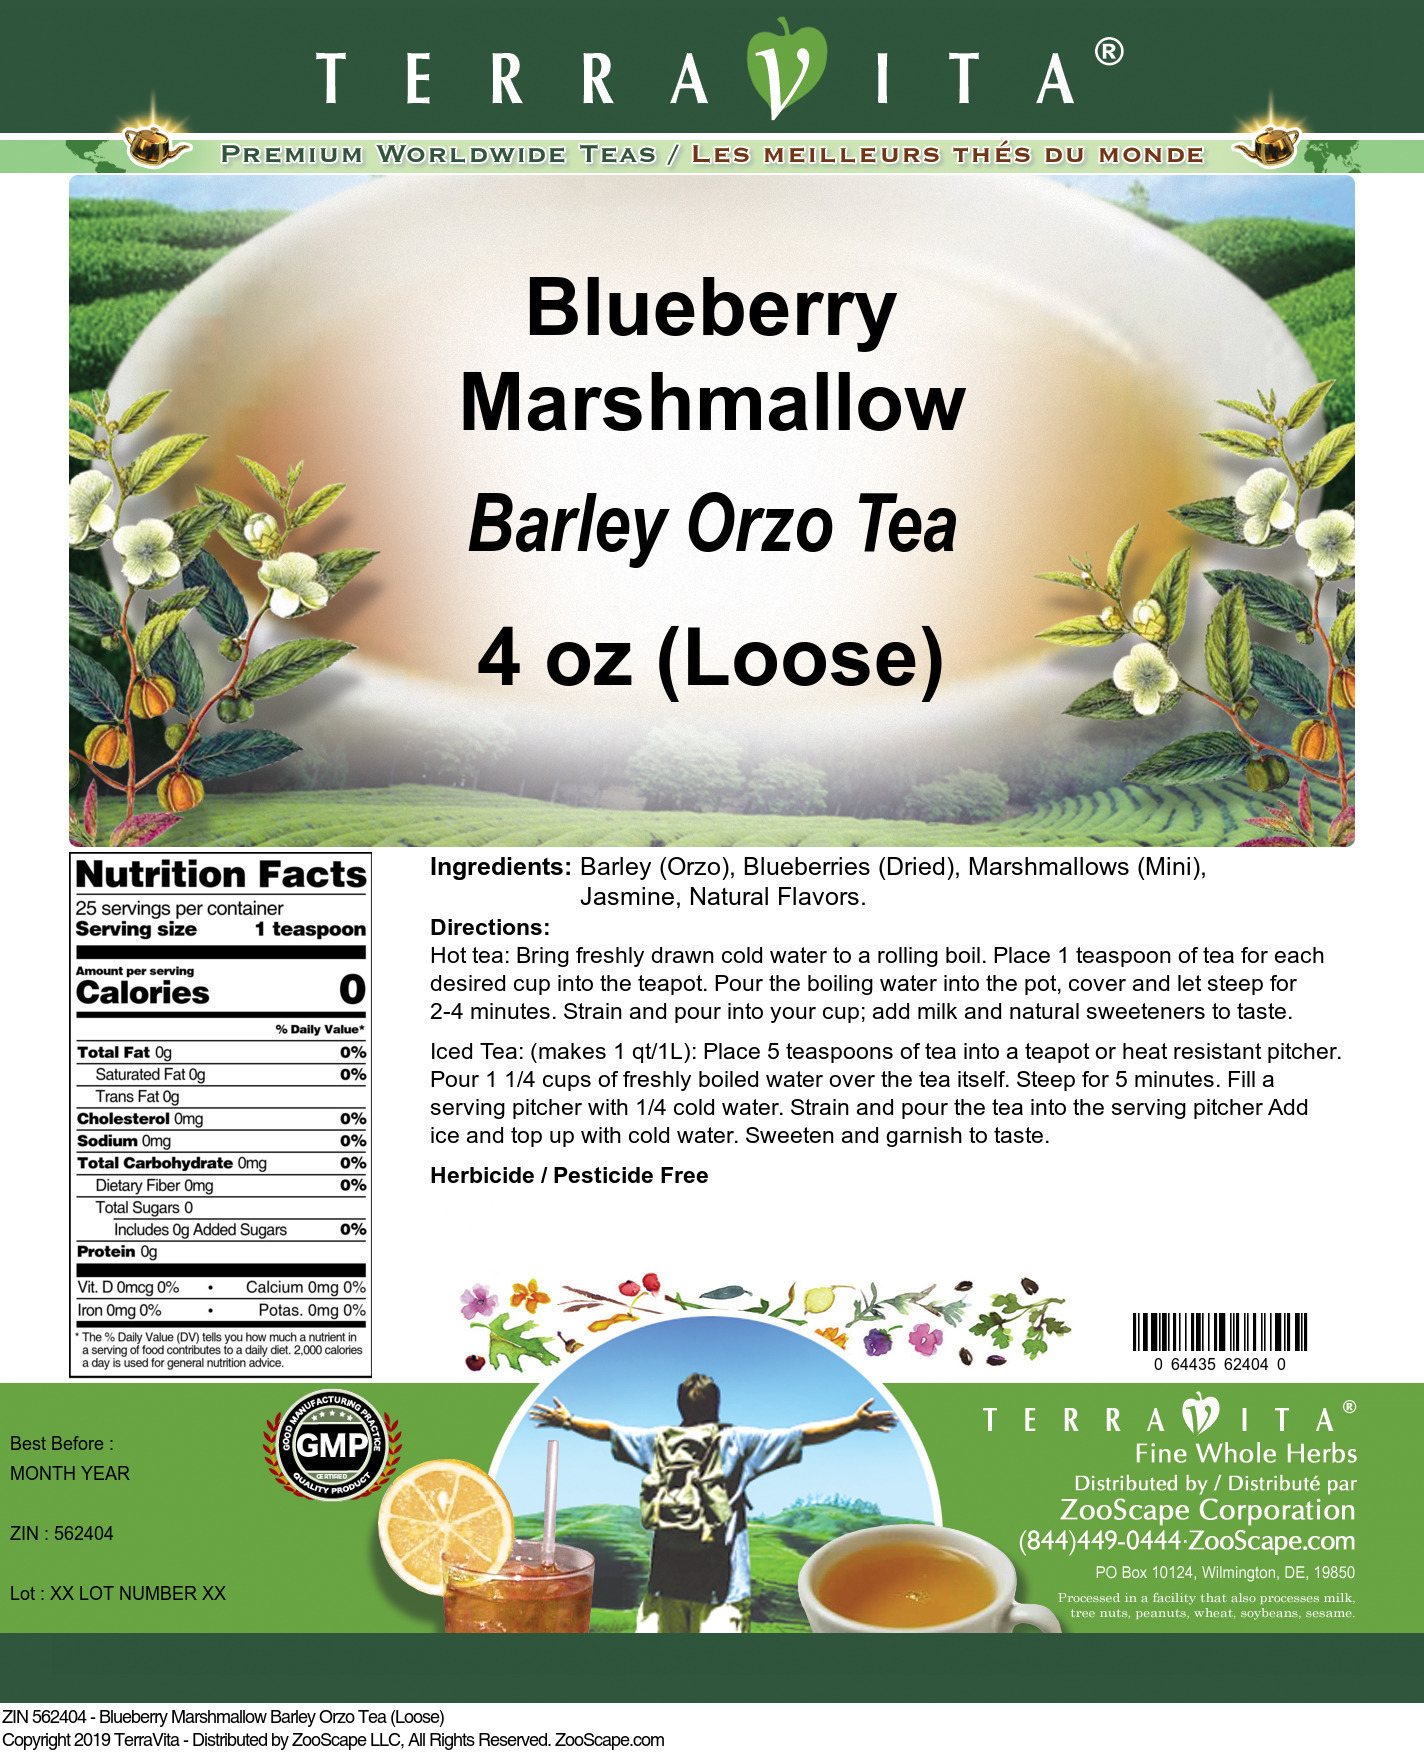 Blueberry Marshmallow Barley Orzo Tea (Loose) - Label